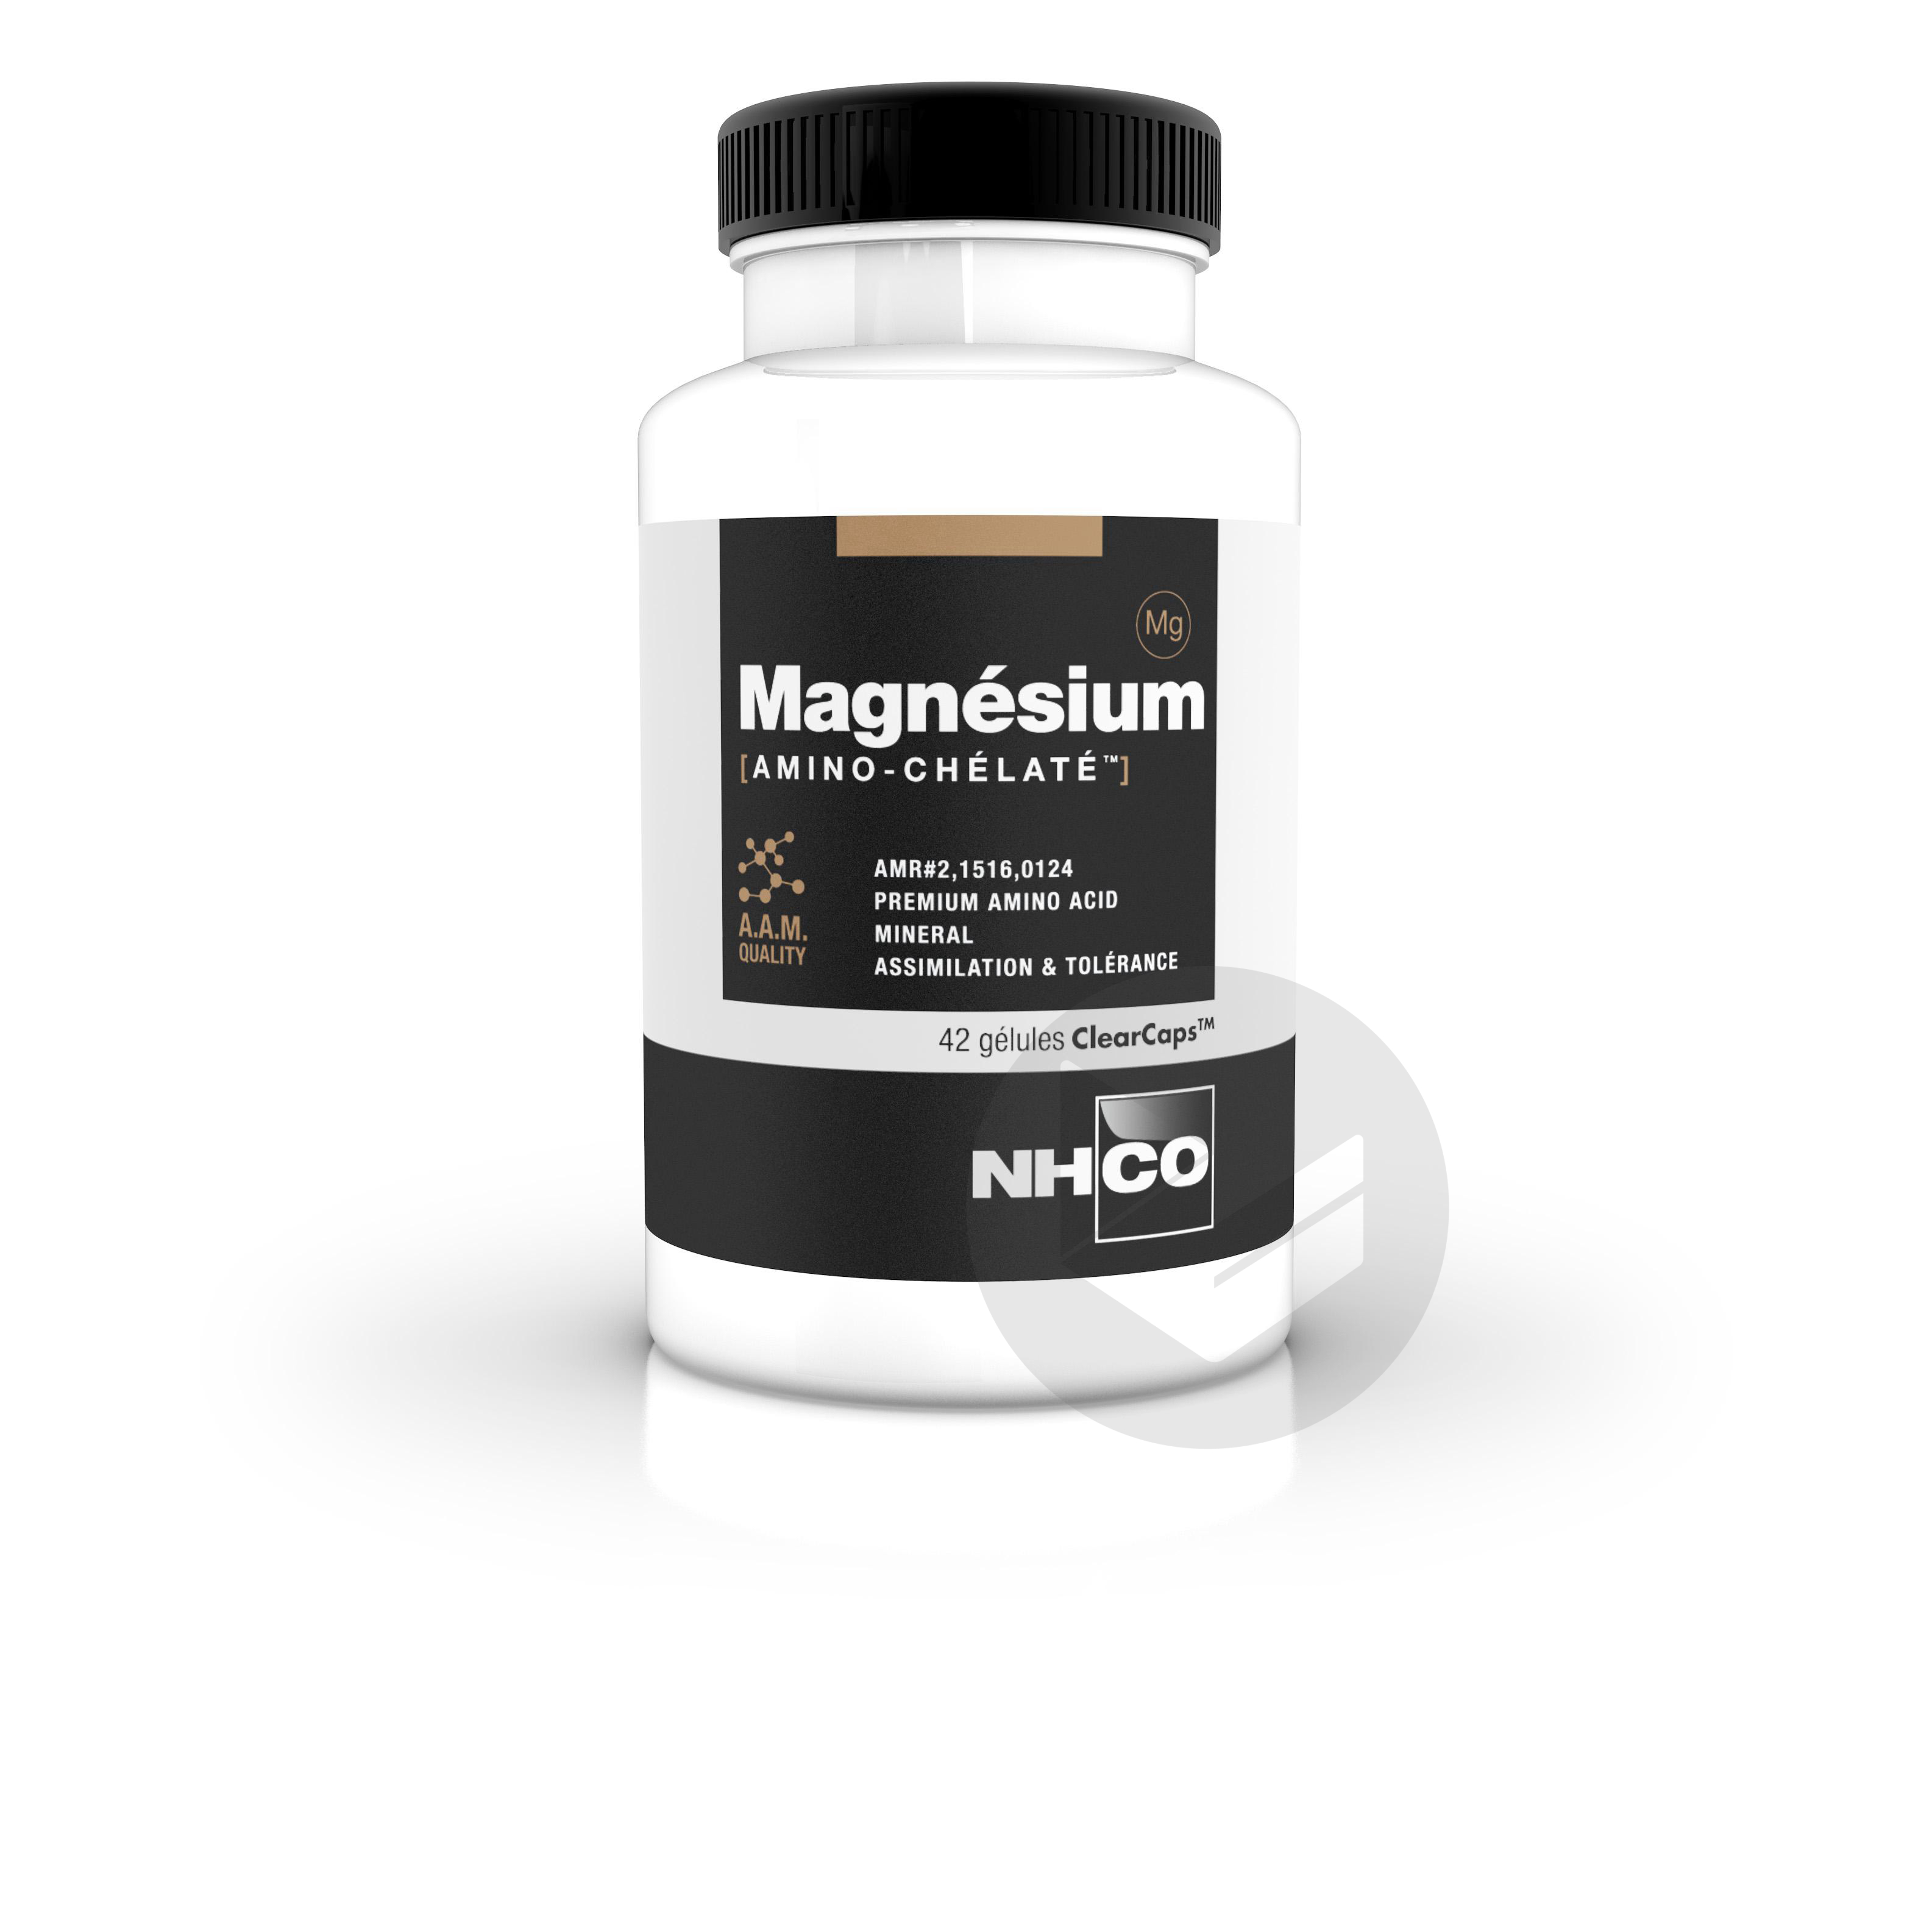 Magnésium x42 gélules